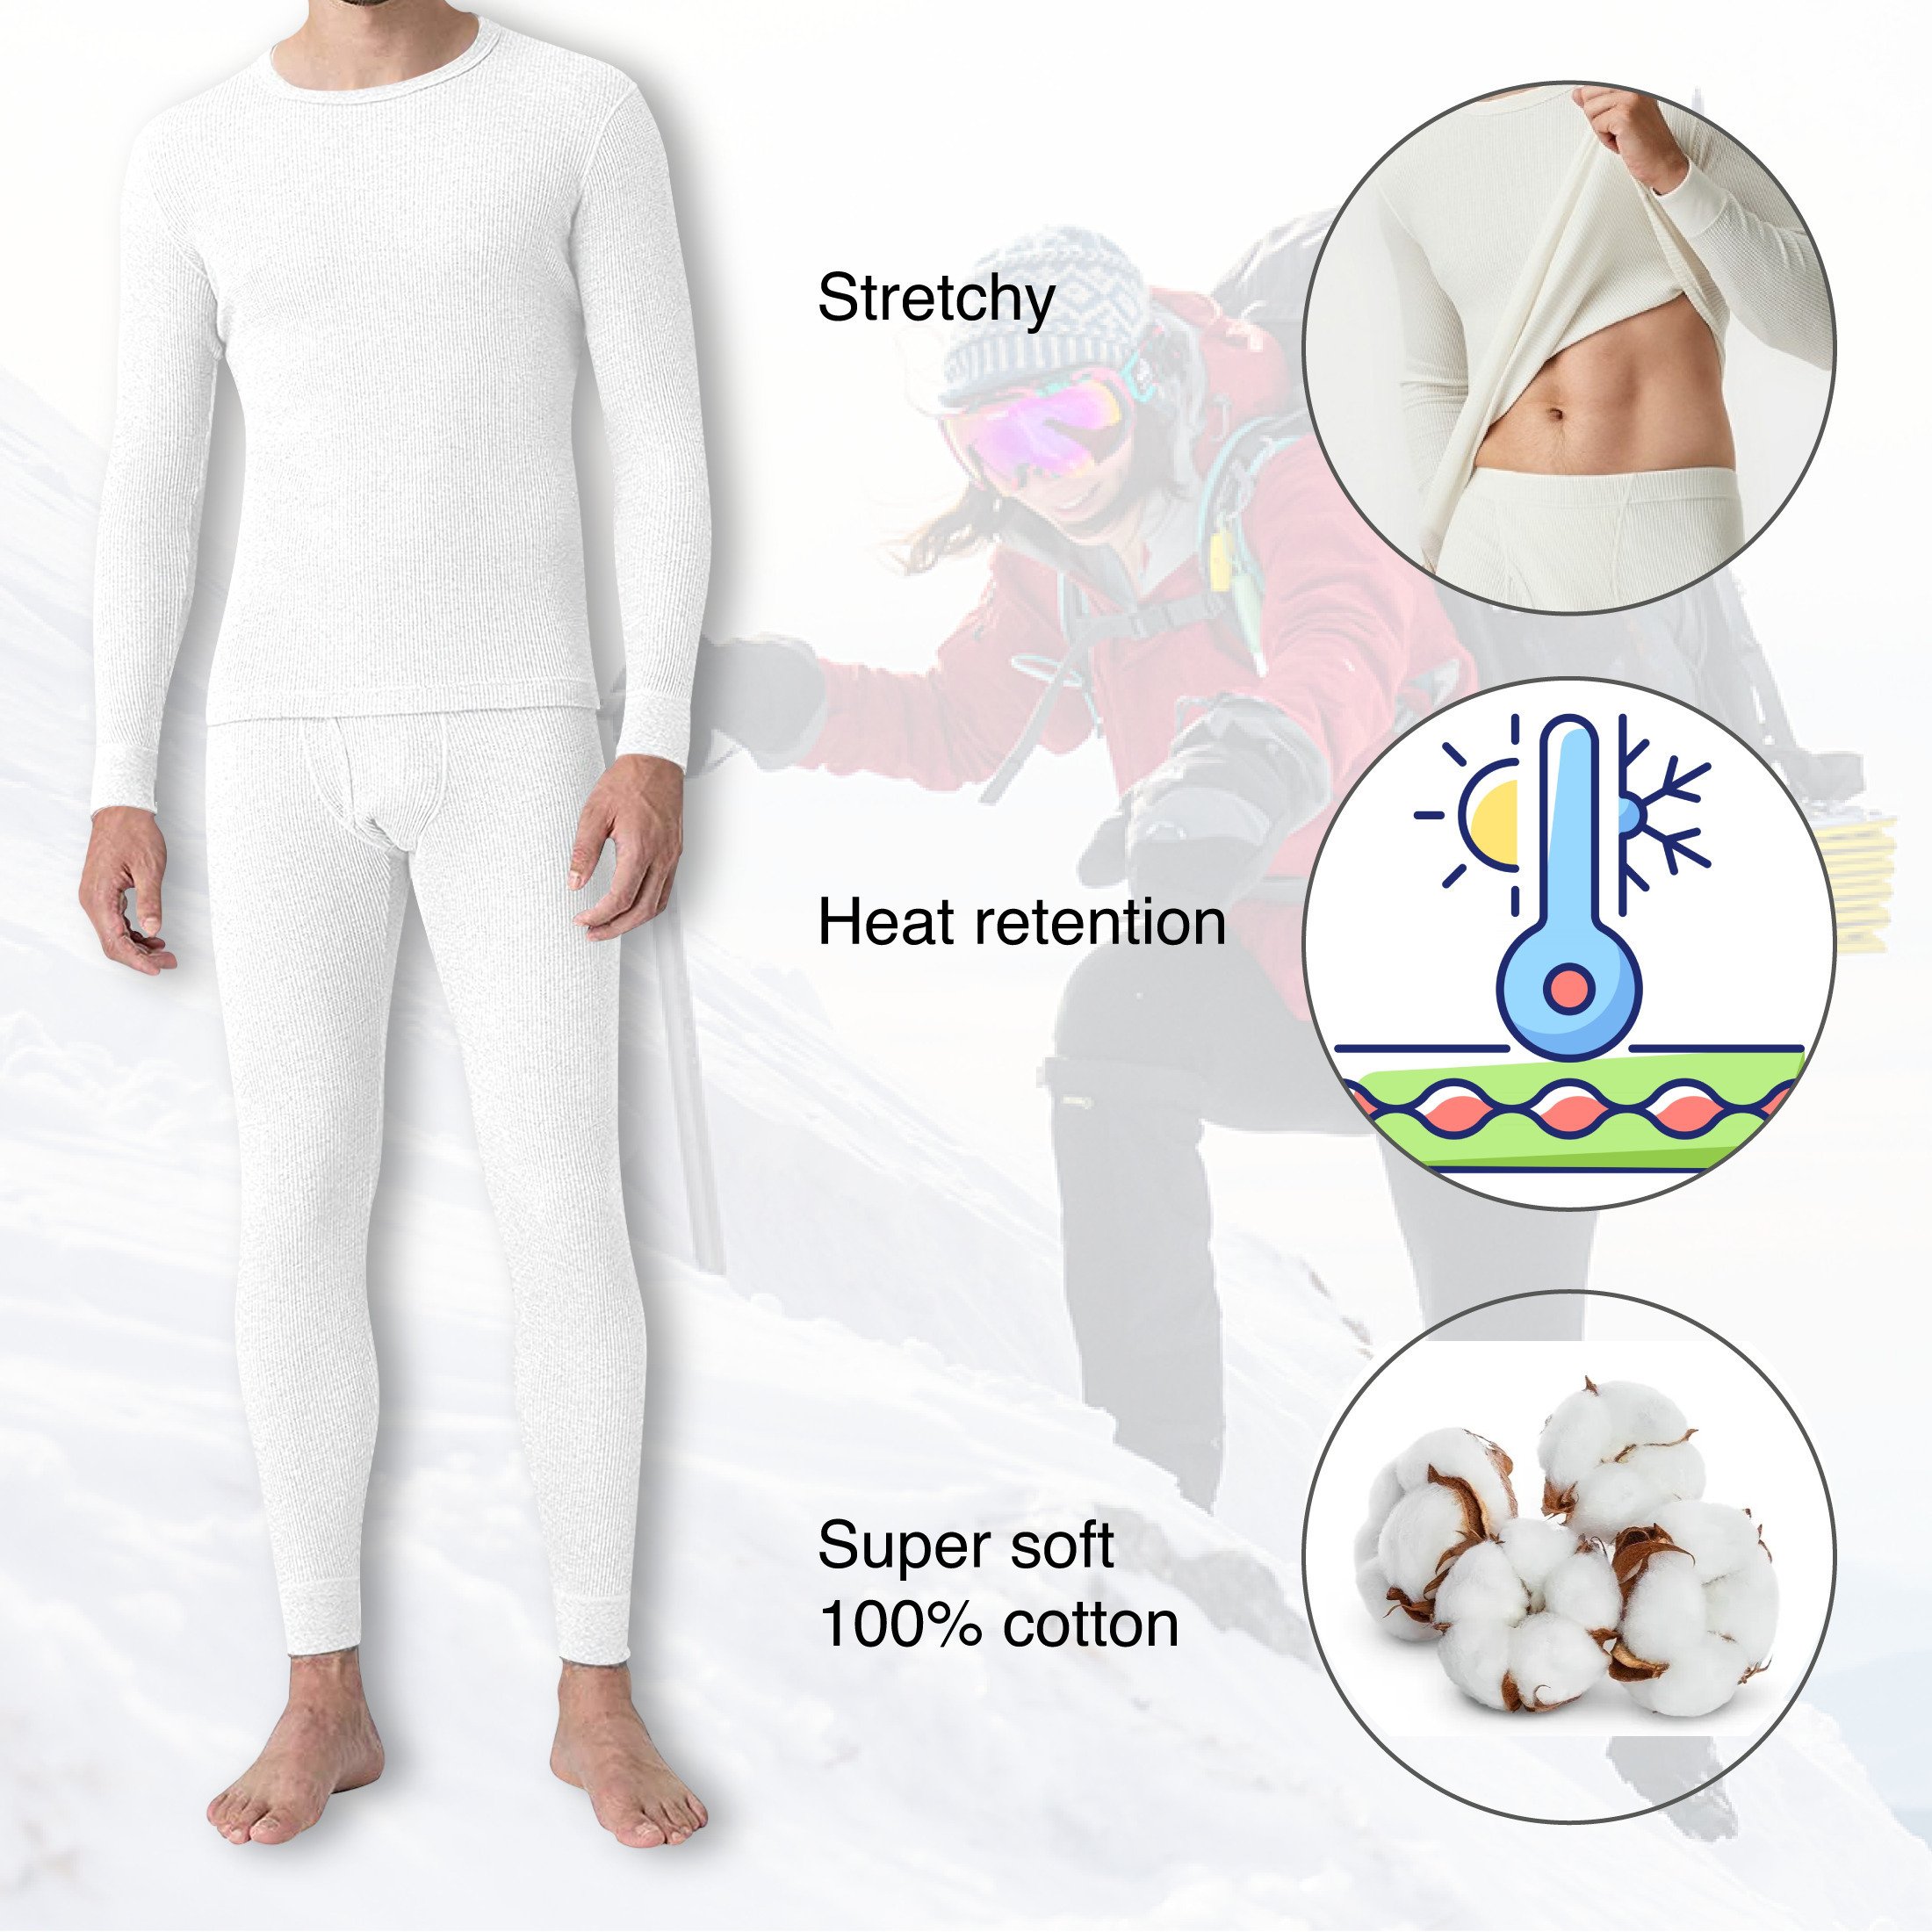 2-Sets: Men's Super Soft Cotton Waffle Knit Winter Thermal Underwear Set - Black & Navy, X-Large